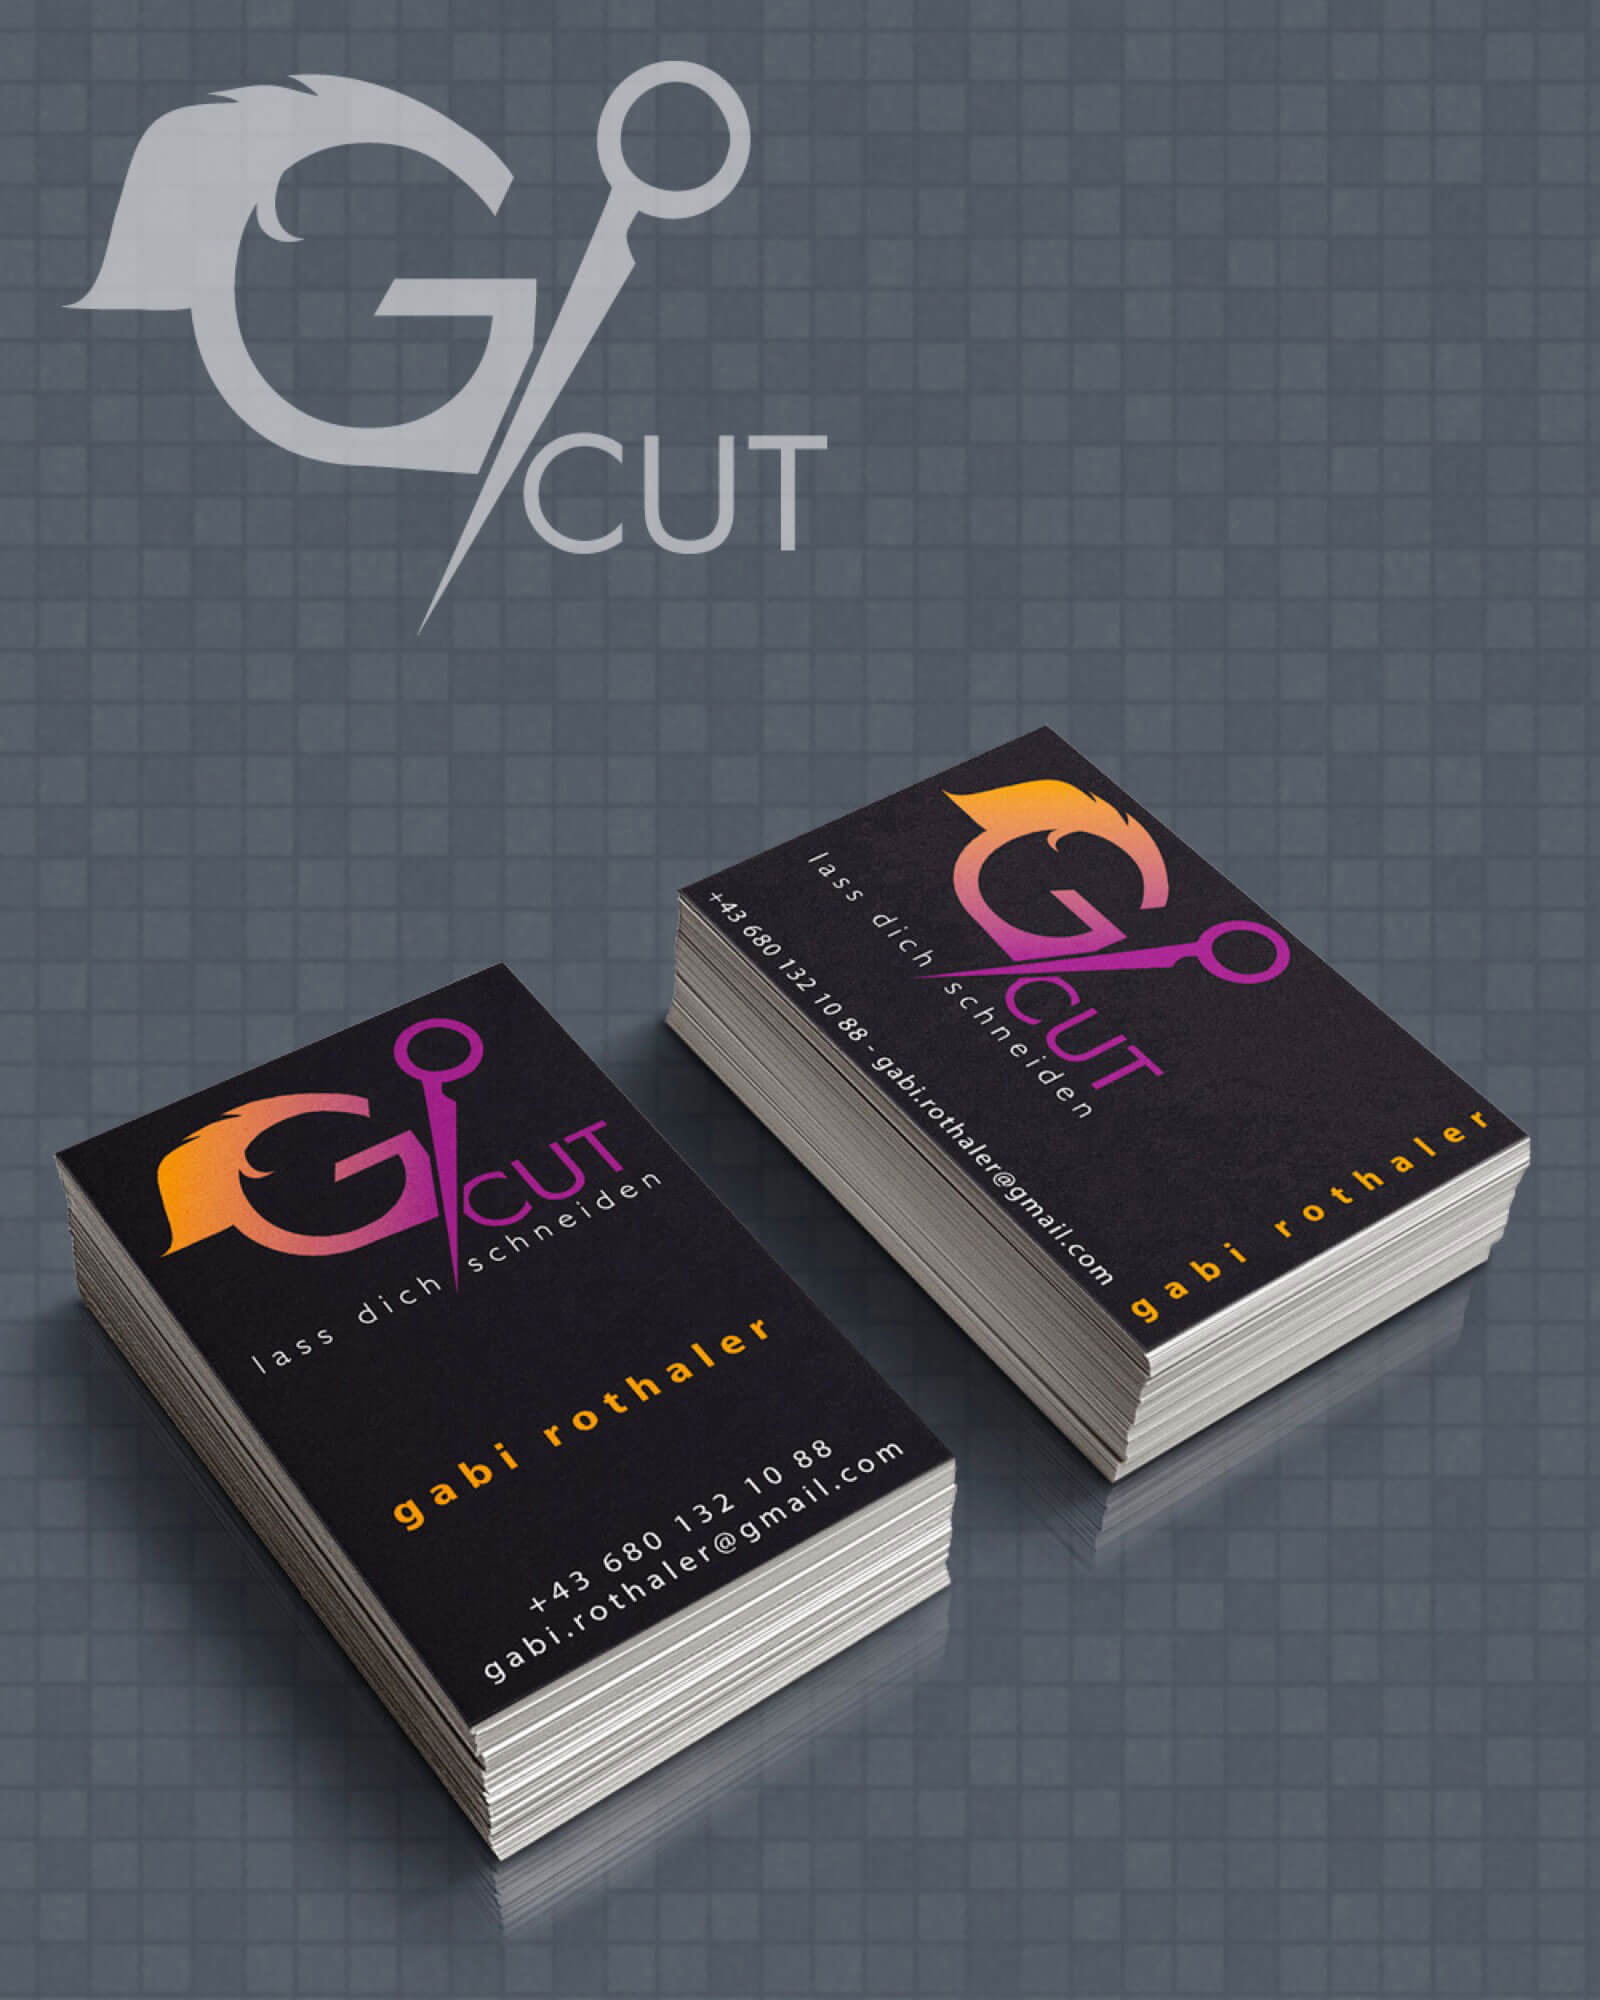 G-Cut, Wien 7: Logogestaltung